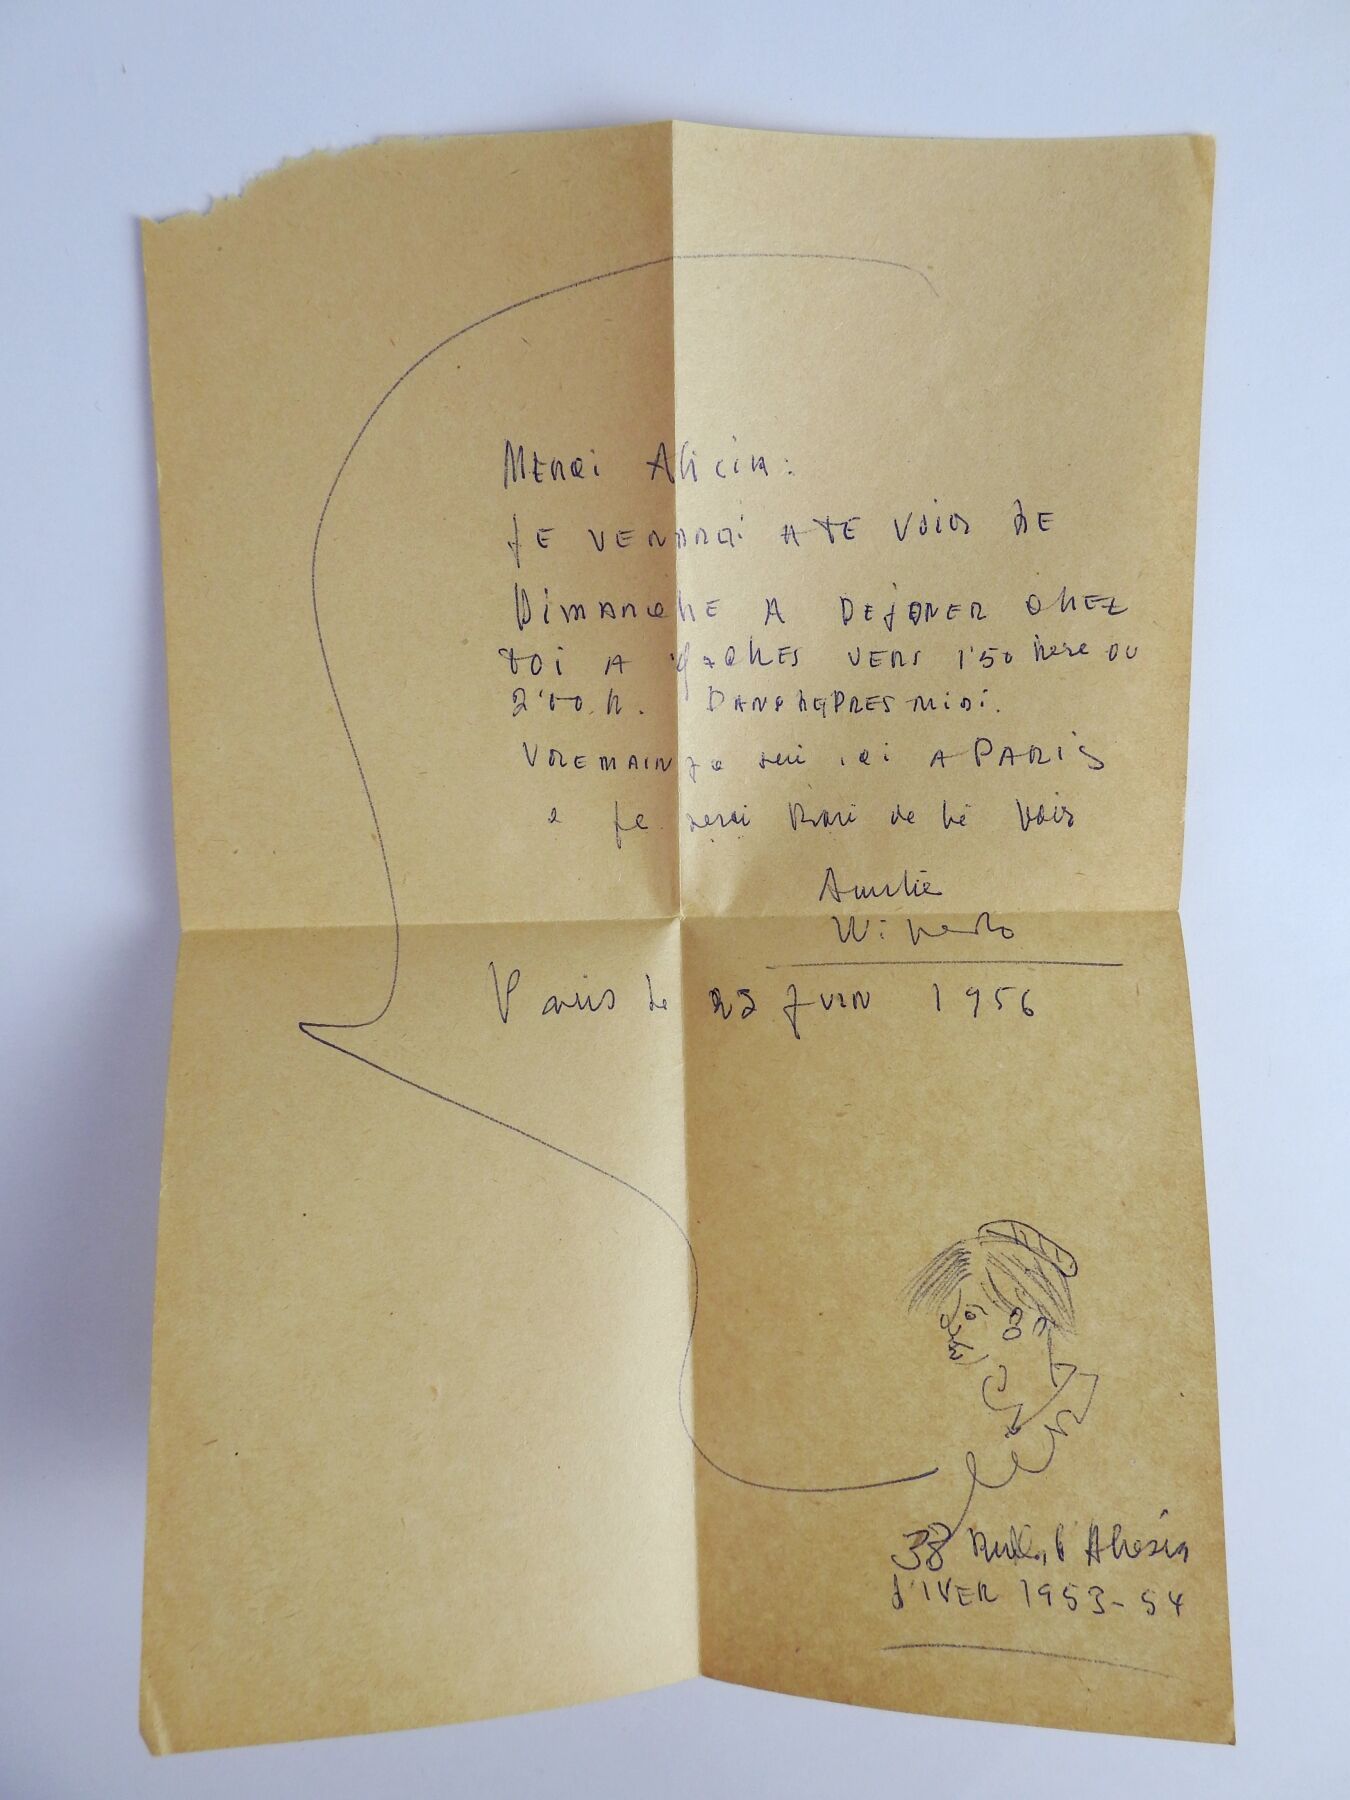 Null 签名为Wifredo LAM的手写信件，收件人为Alicia，巴黎，1956年6月，附有 "女人的轮廓 "图。23 x 15厘米。左上角有破损。

提&hellip;